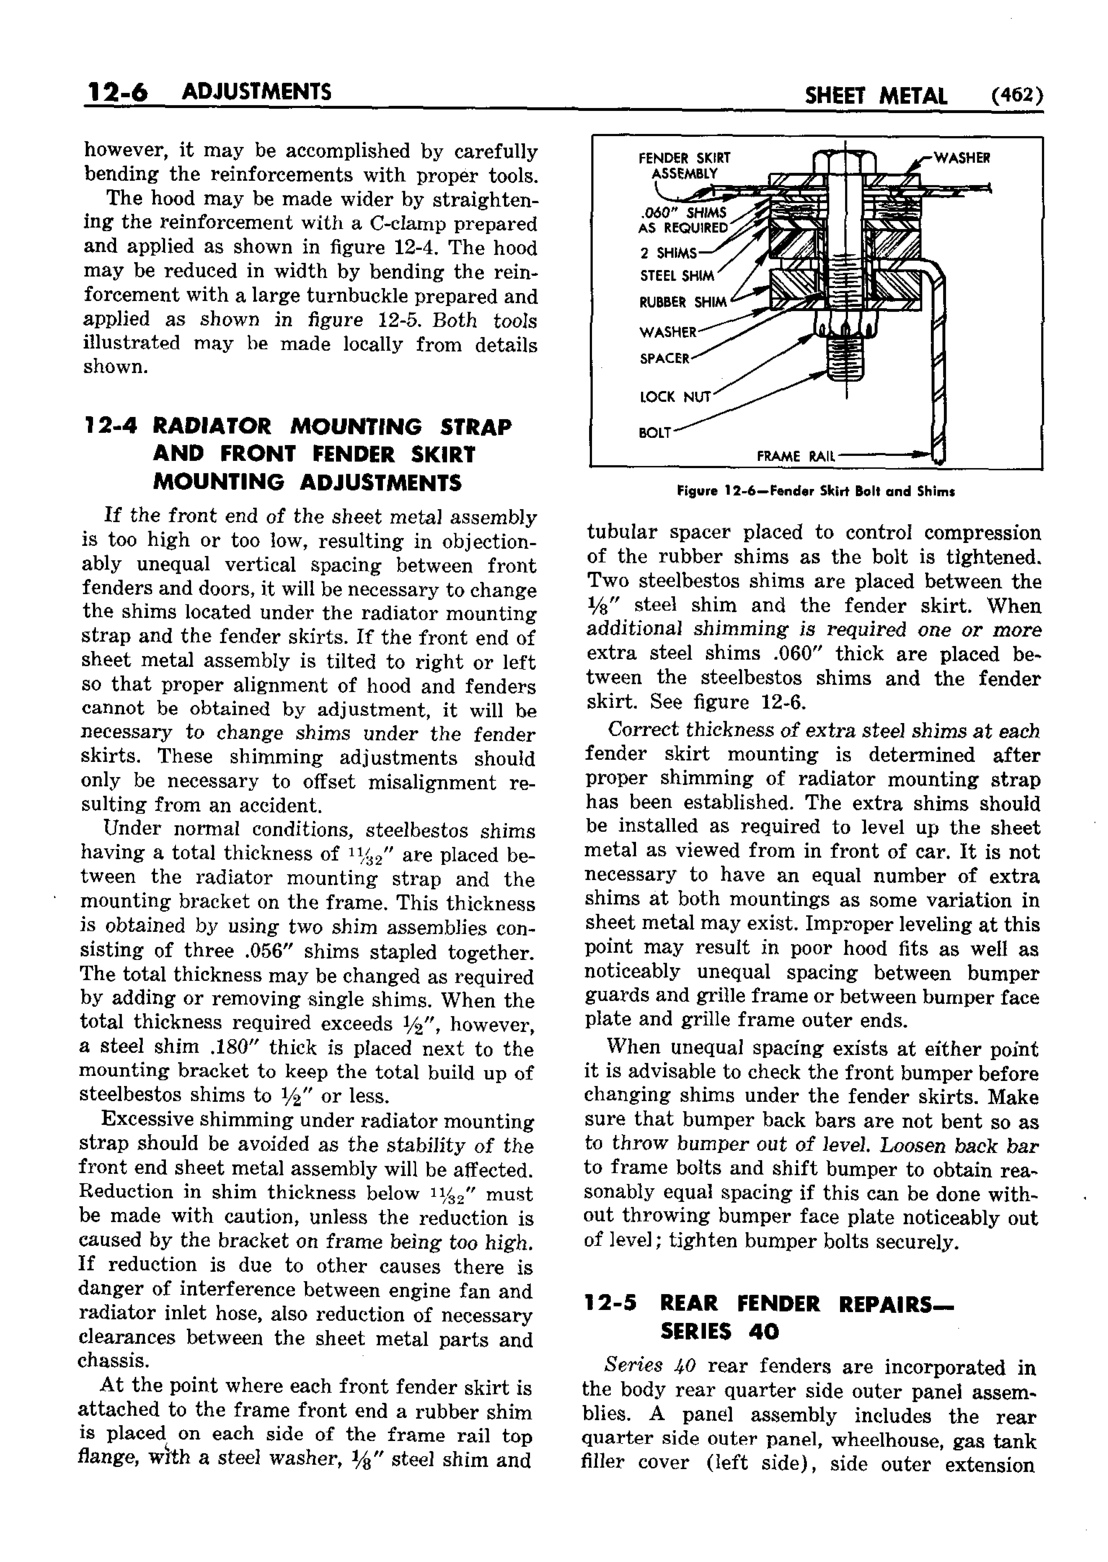 n_13 1952 Buick Shop Manual - Sheet Metal-006-006.jpg